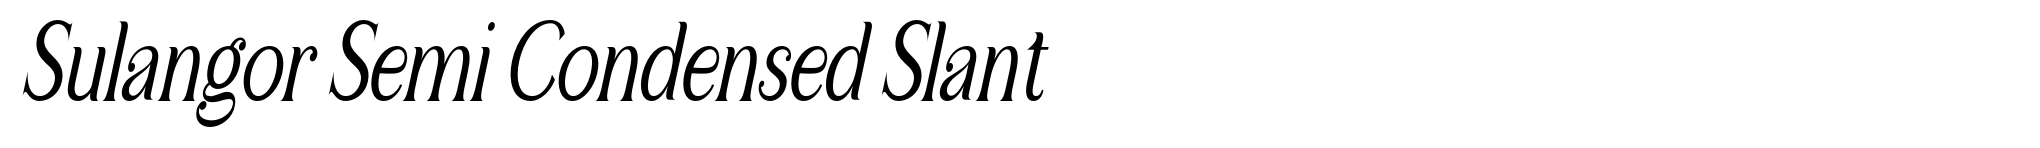 Sulangor Semi Condensed Slant image